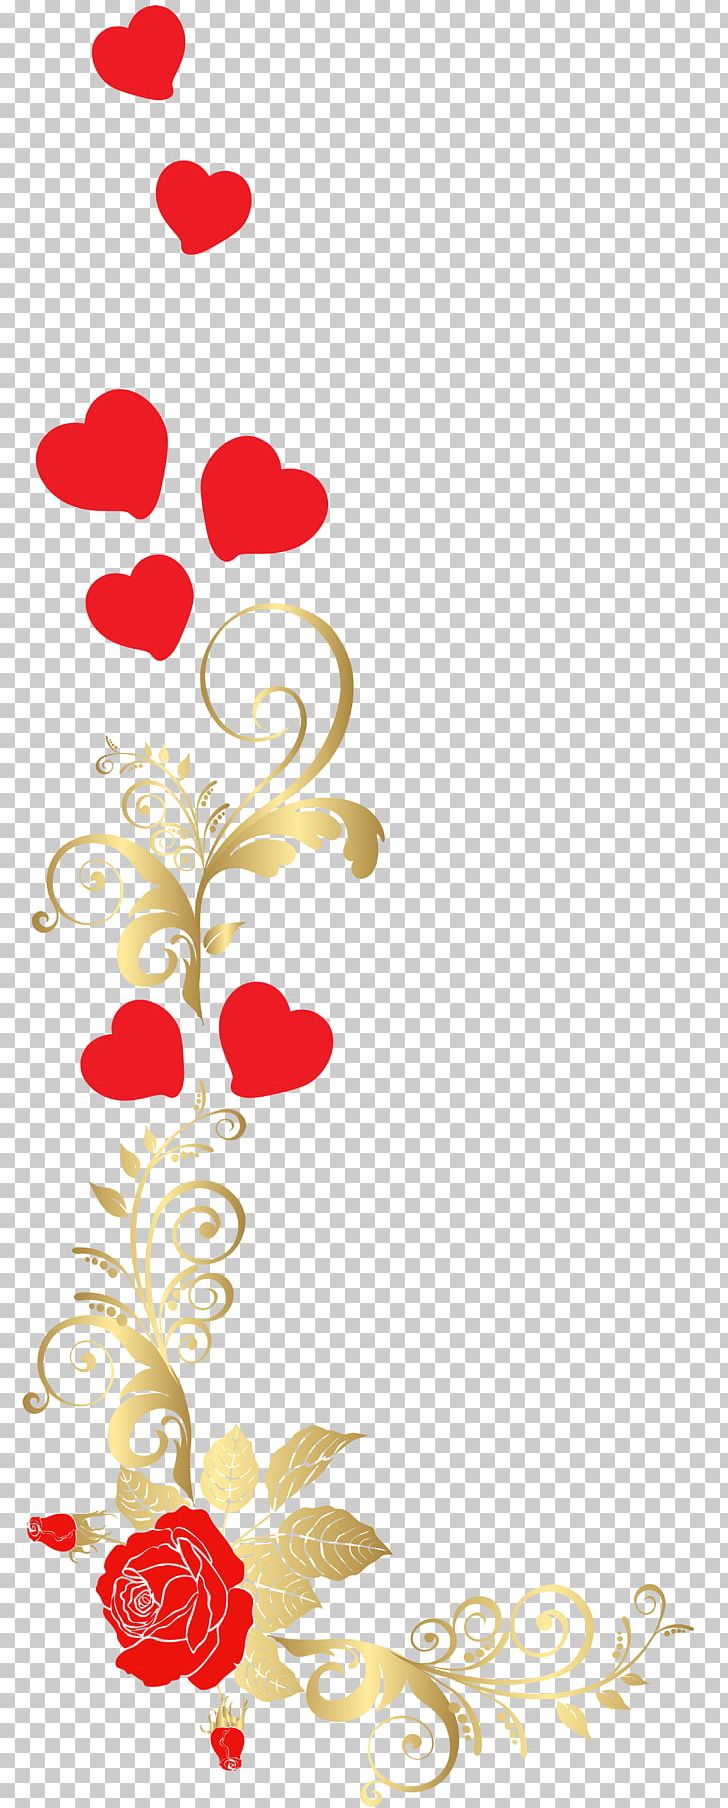 Love Flower Arranging Text PNG, Clipart, Area, Art, Blog, Clip, Decoration Free PNG Download